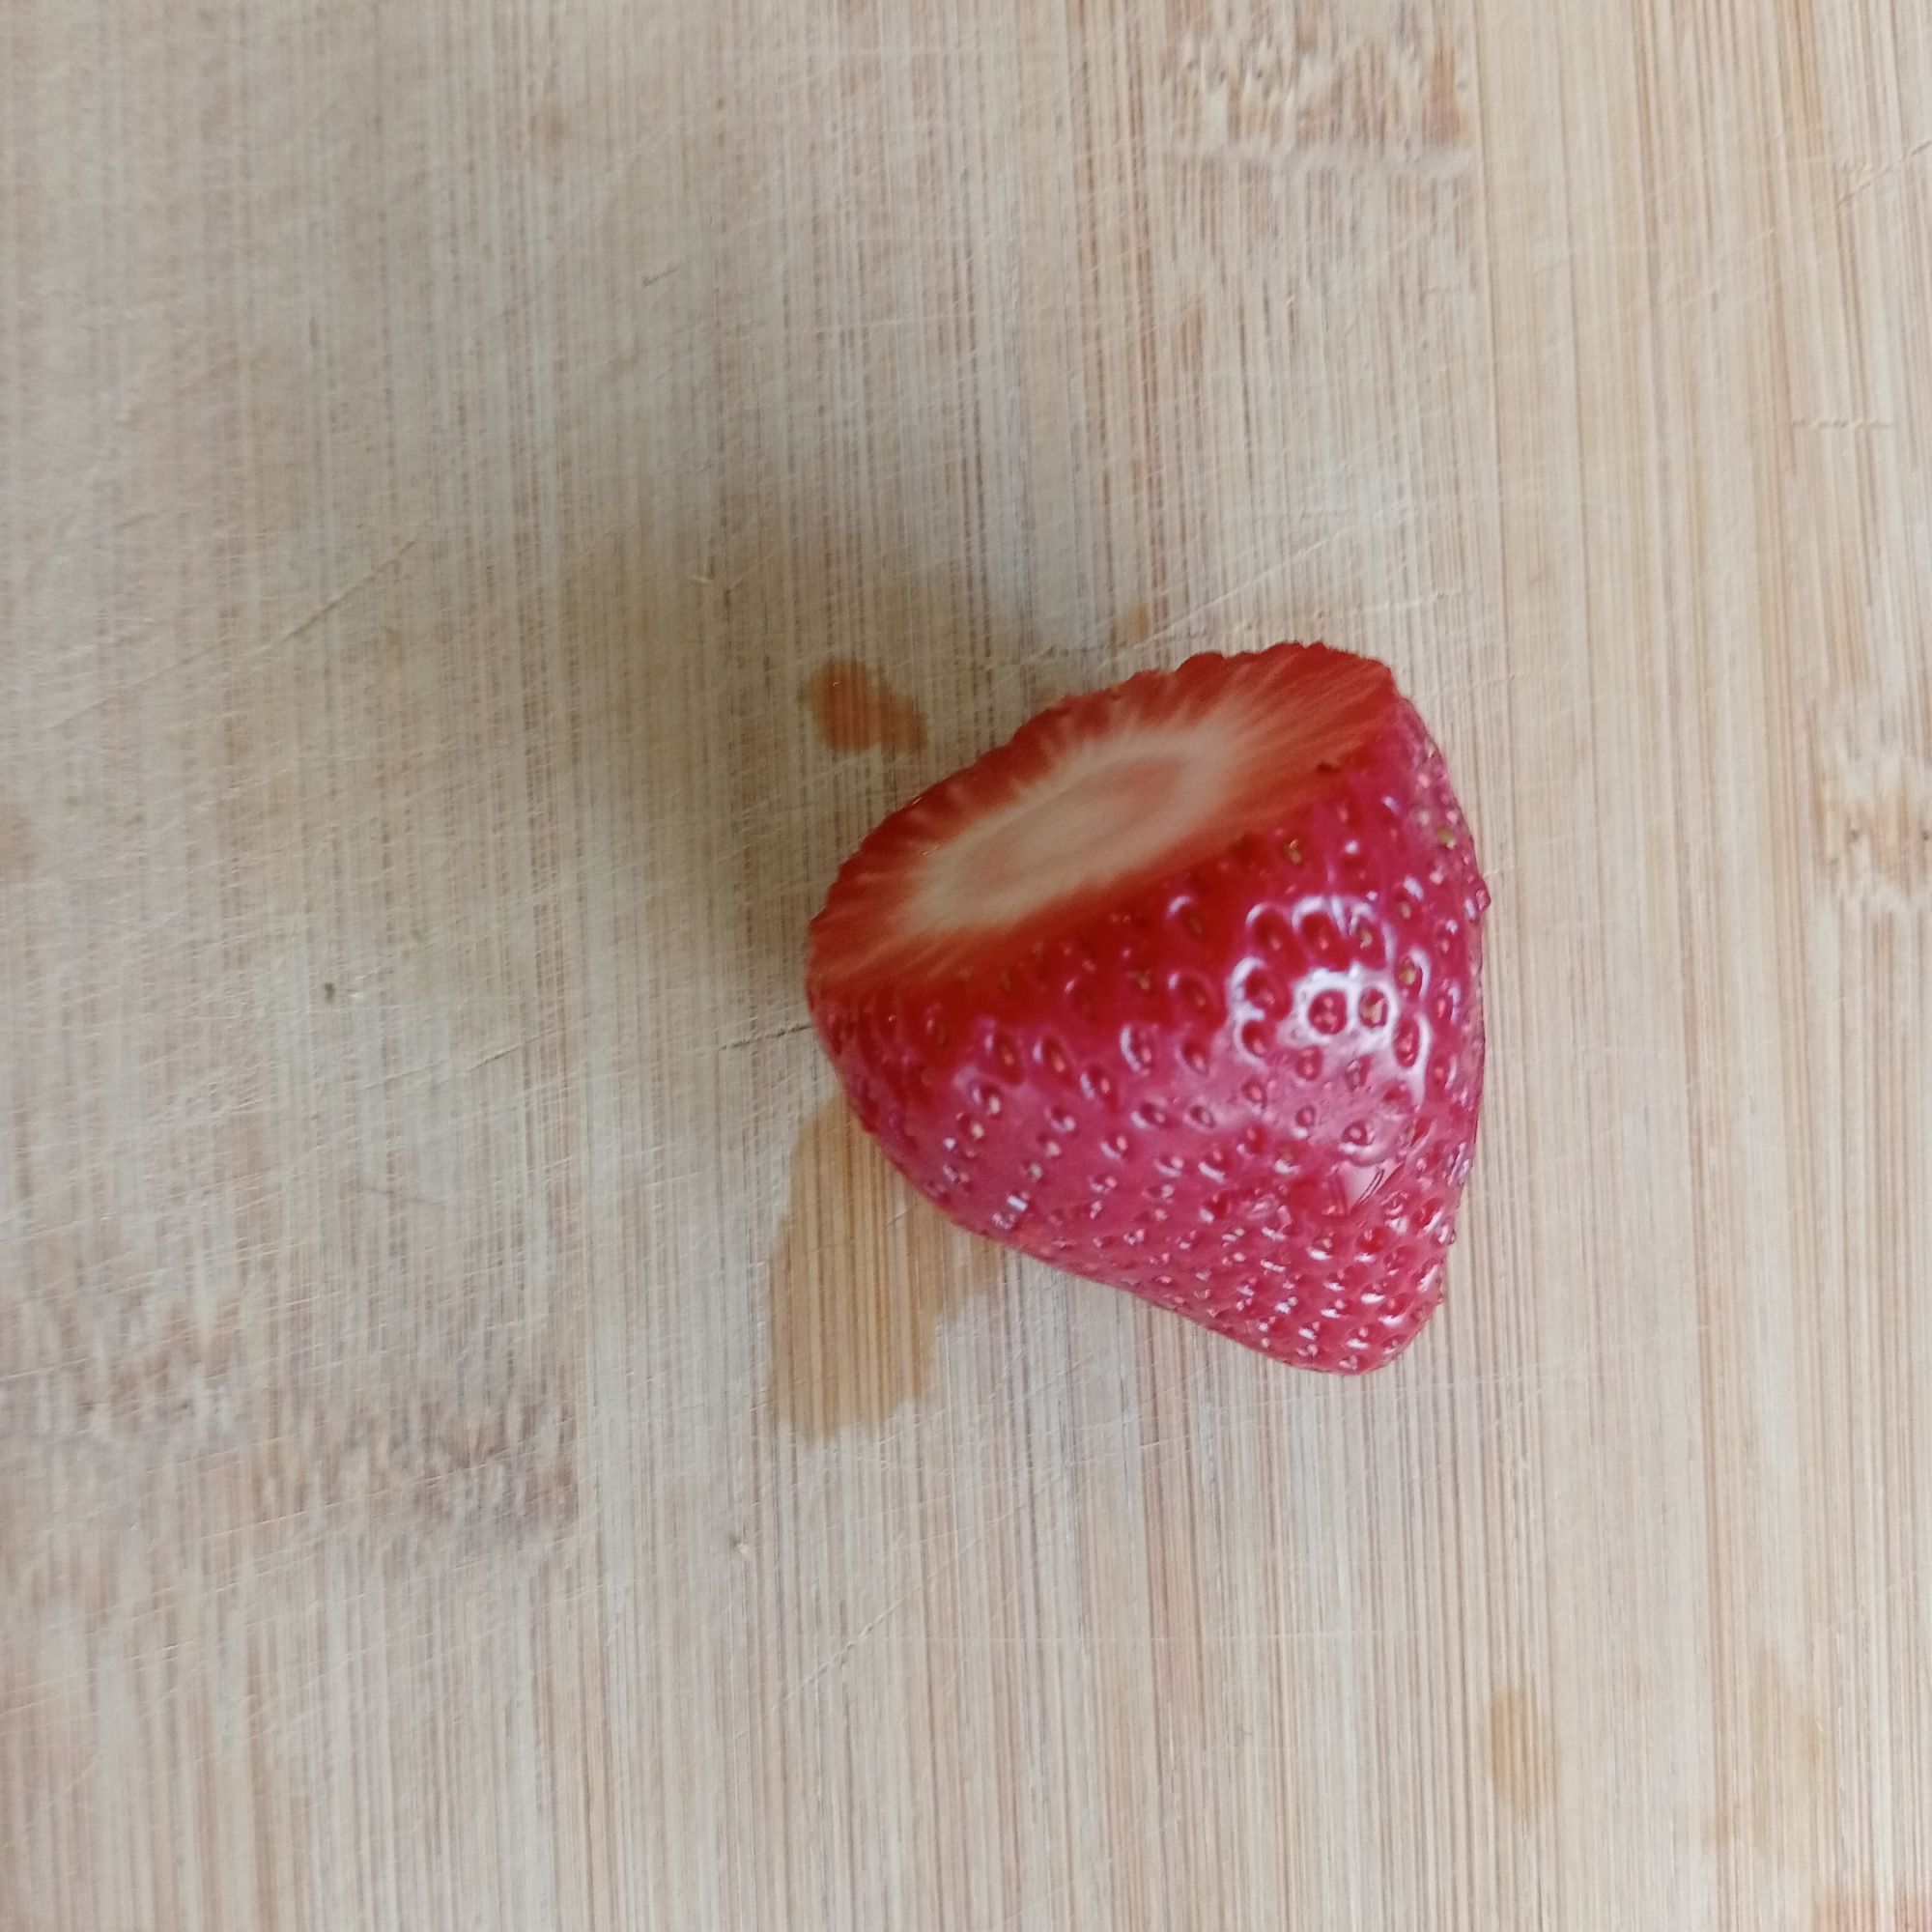 Whole-Strawberry